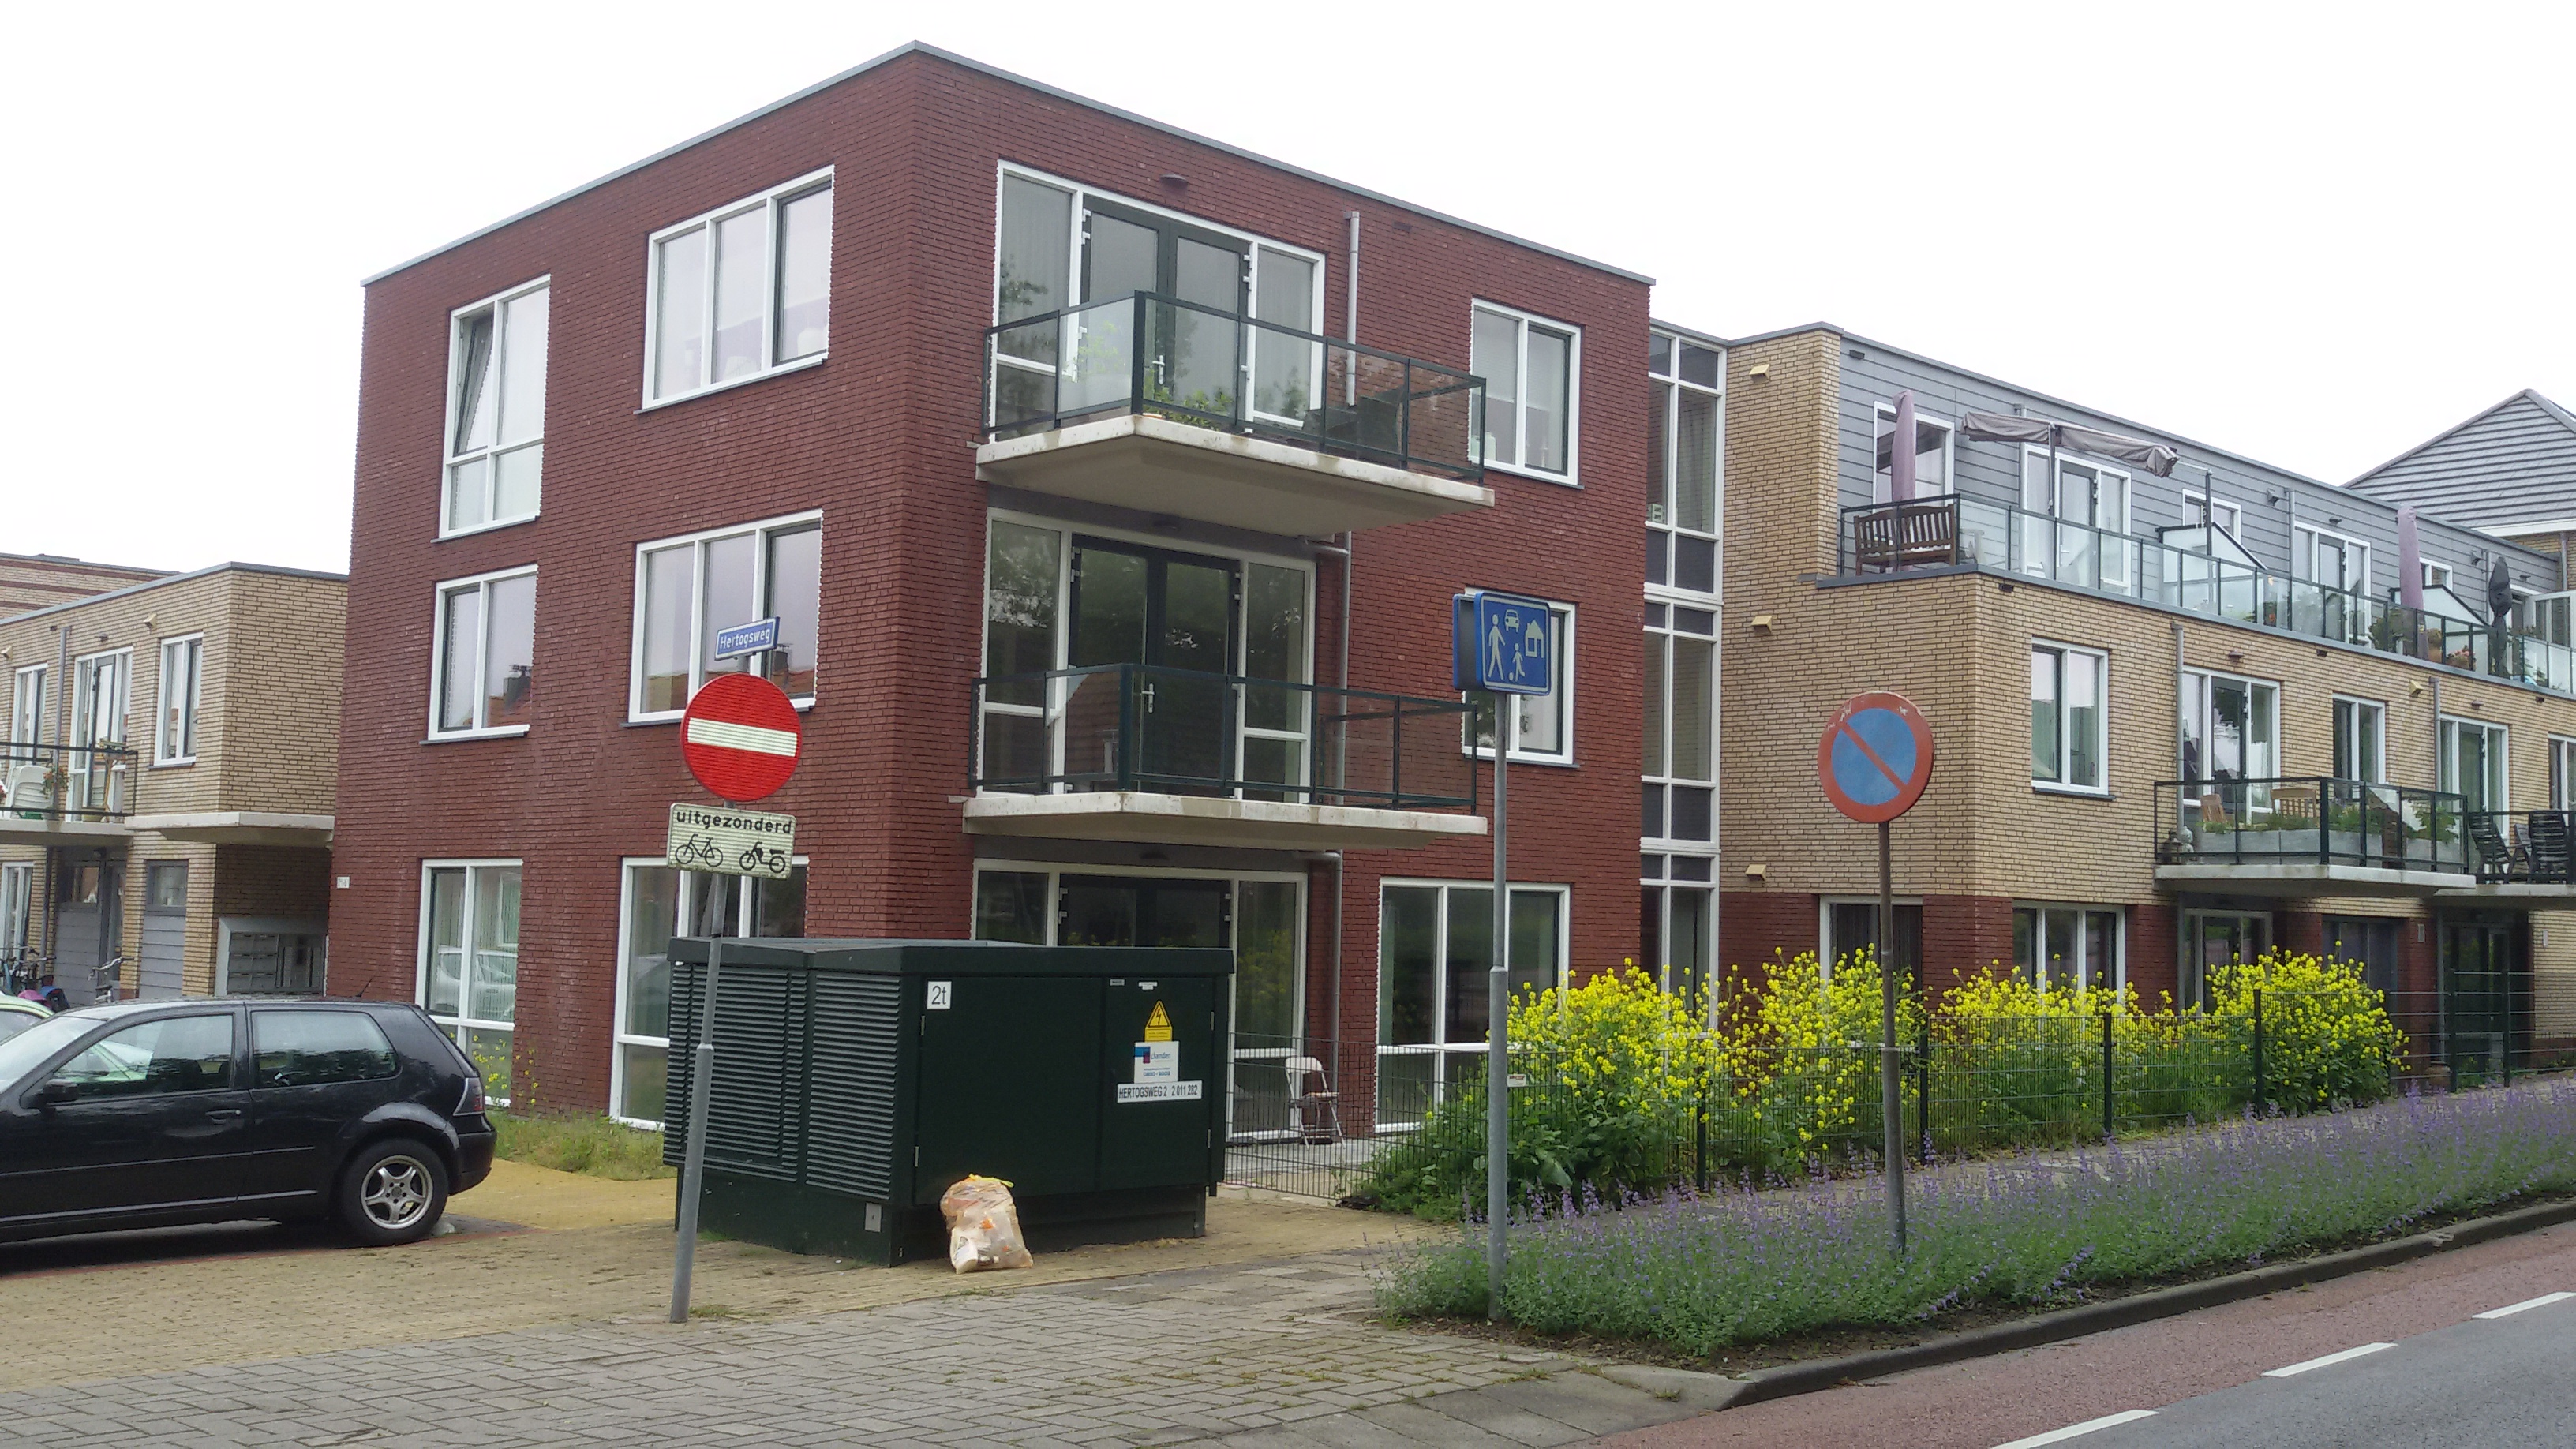 Hertogsweg 4m, 2375 XN Rijpwetering, Nederland